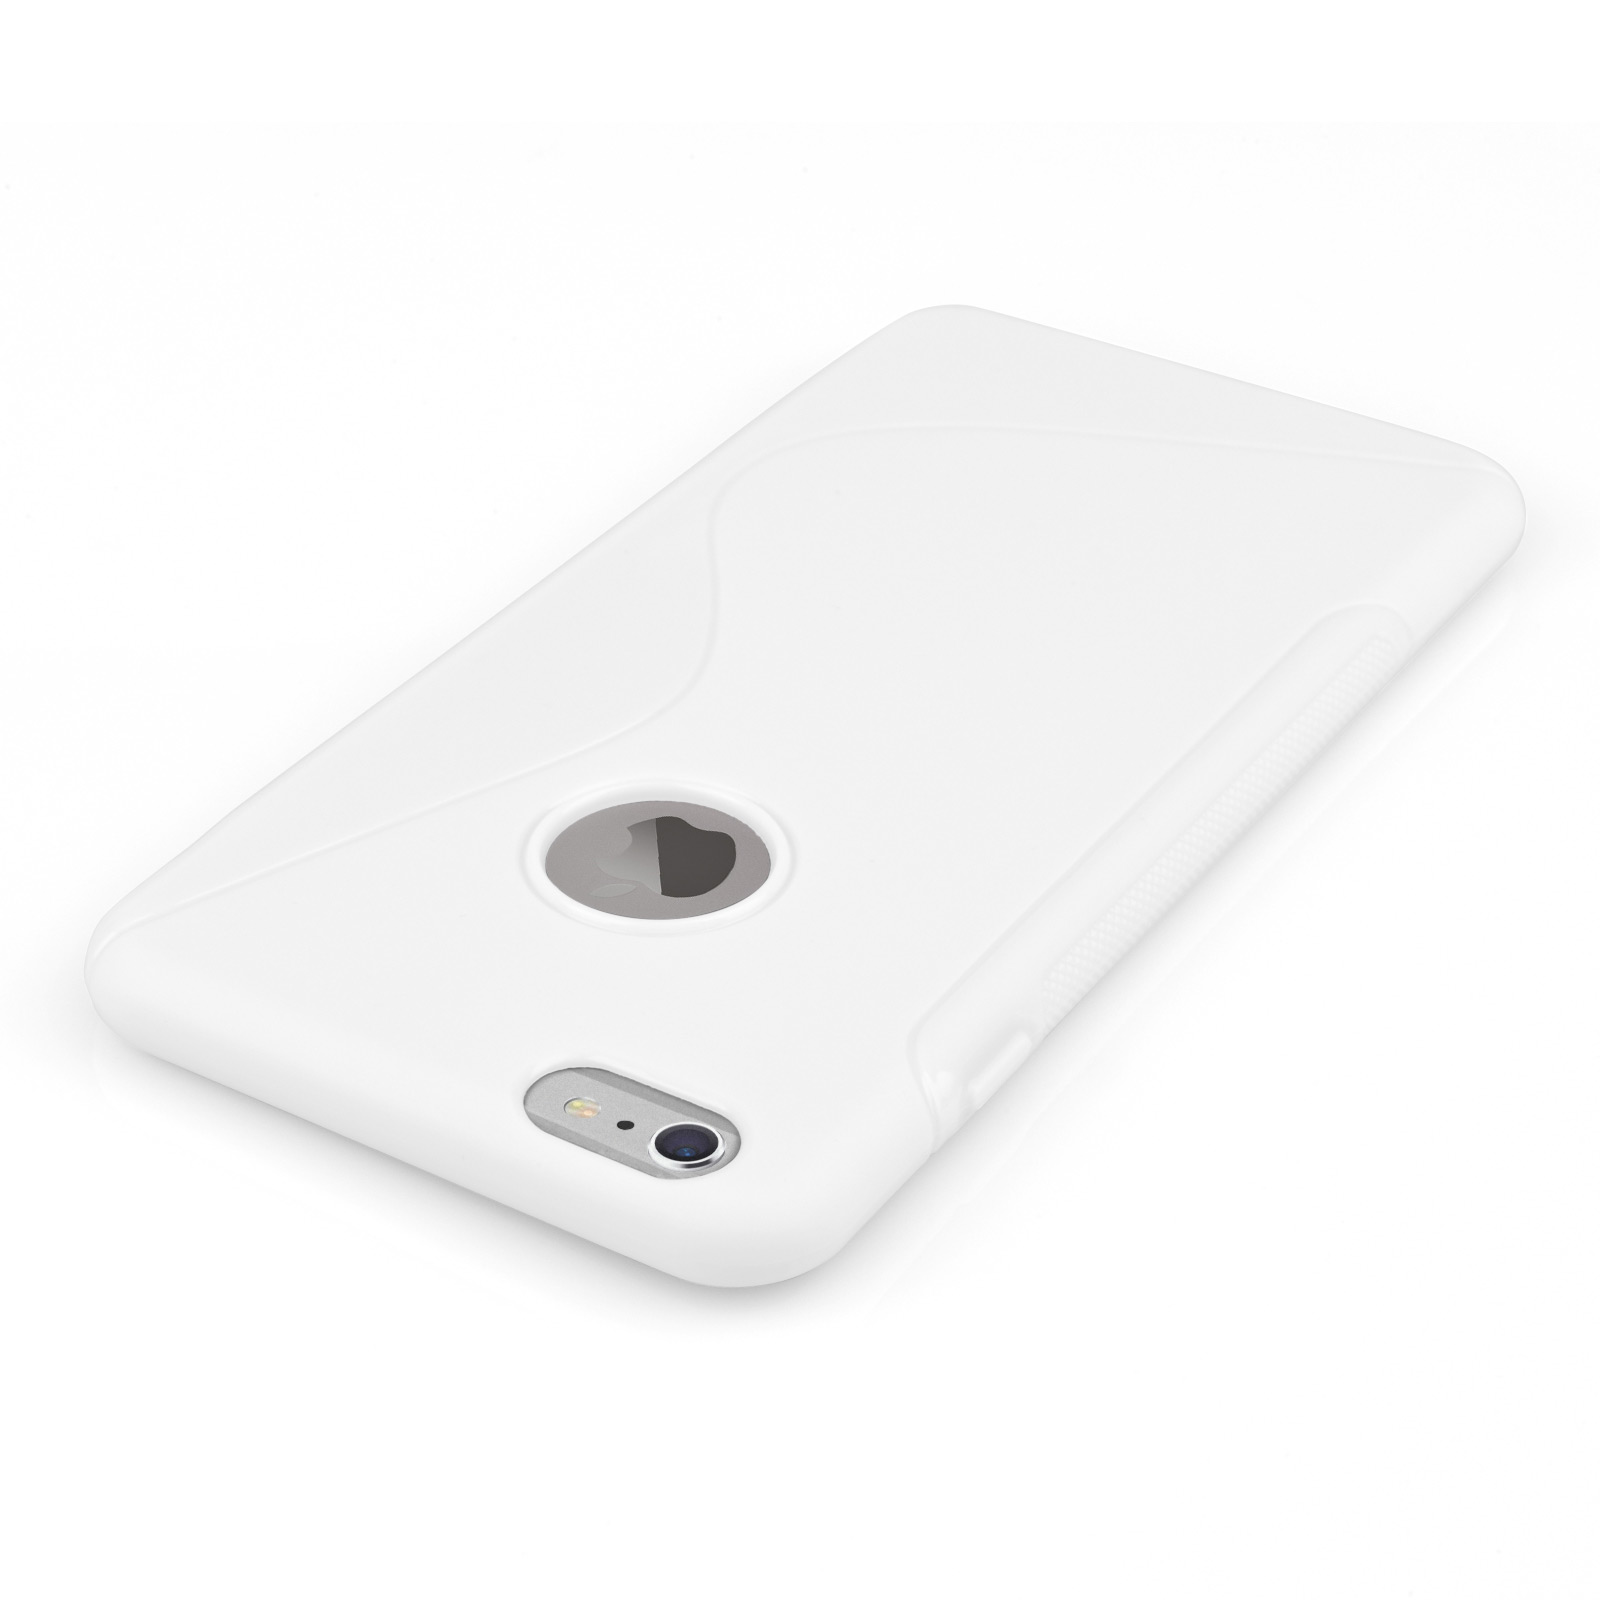 Caseflex iPhone 6 Plus and 6s Plus Silicone Gel S-Line Case - White